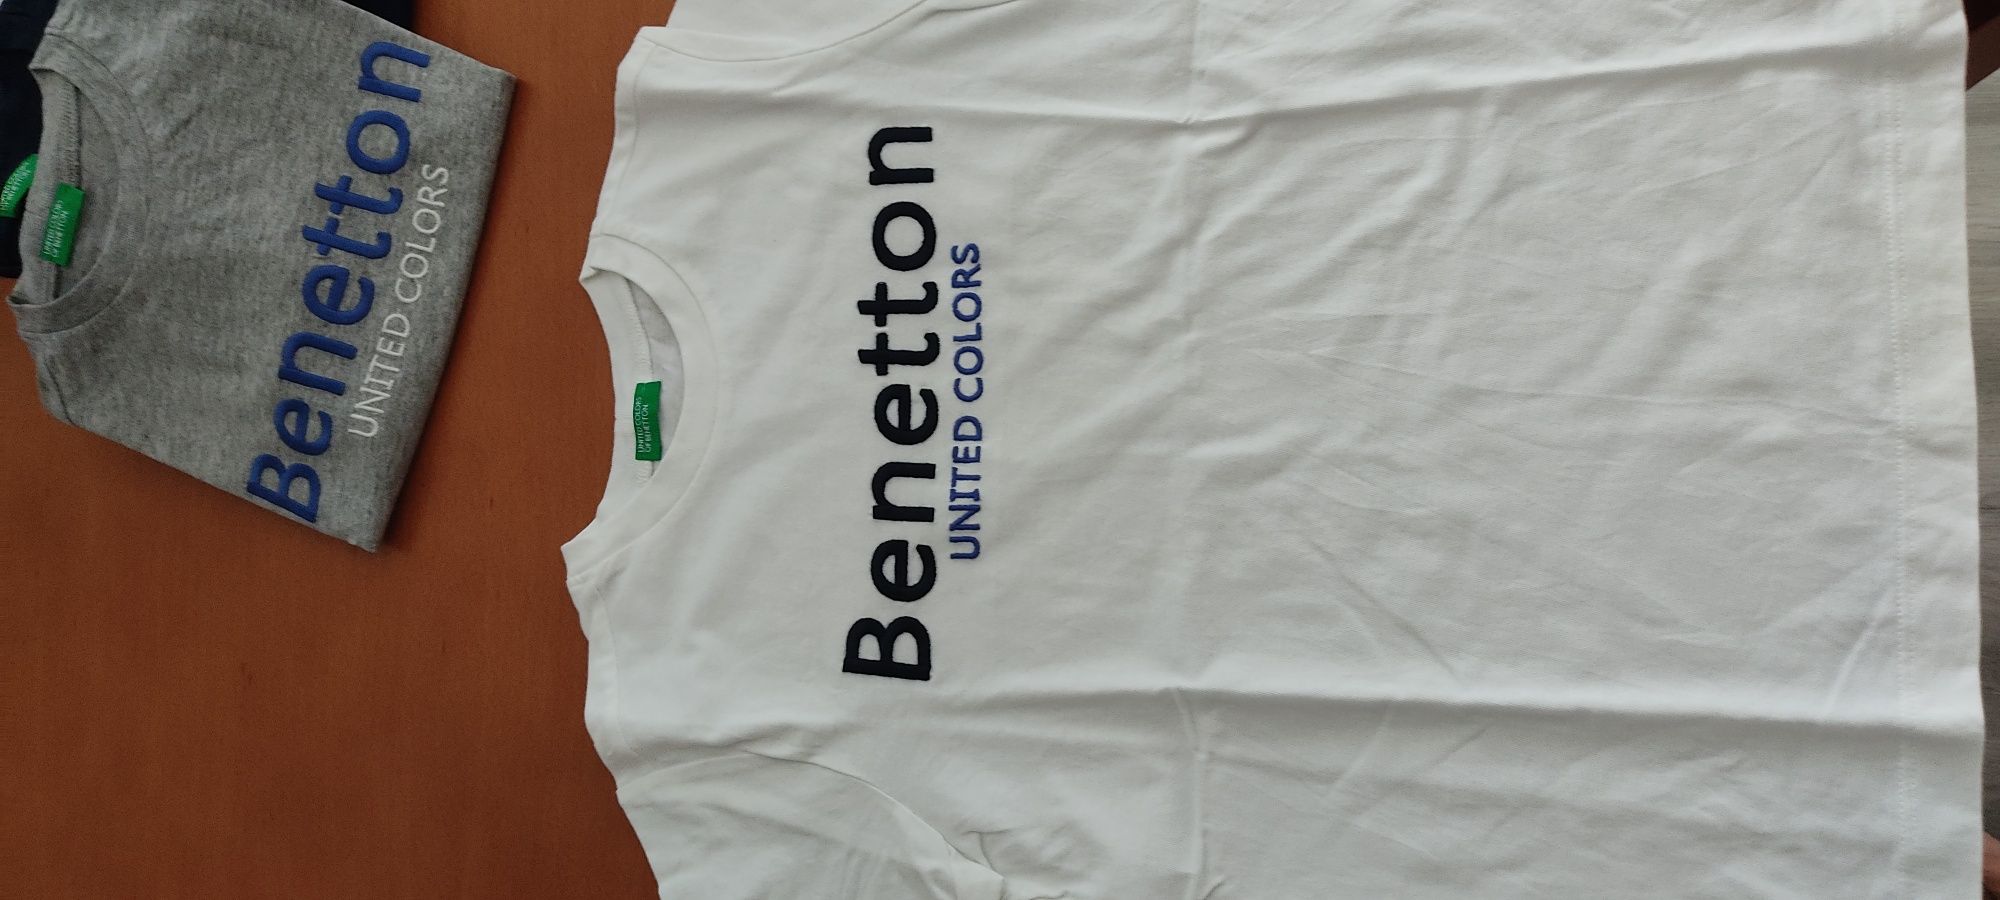 T-shirts Benetton novas